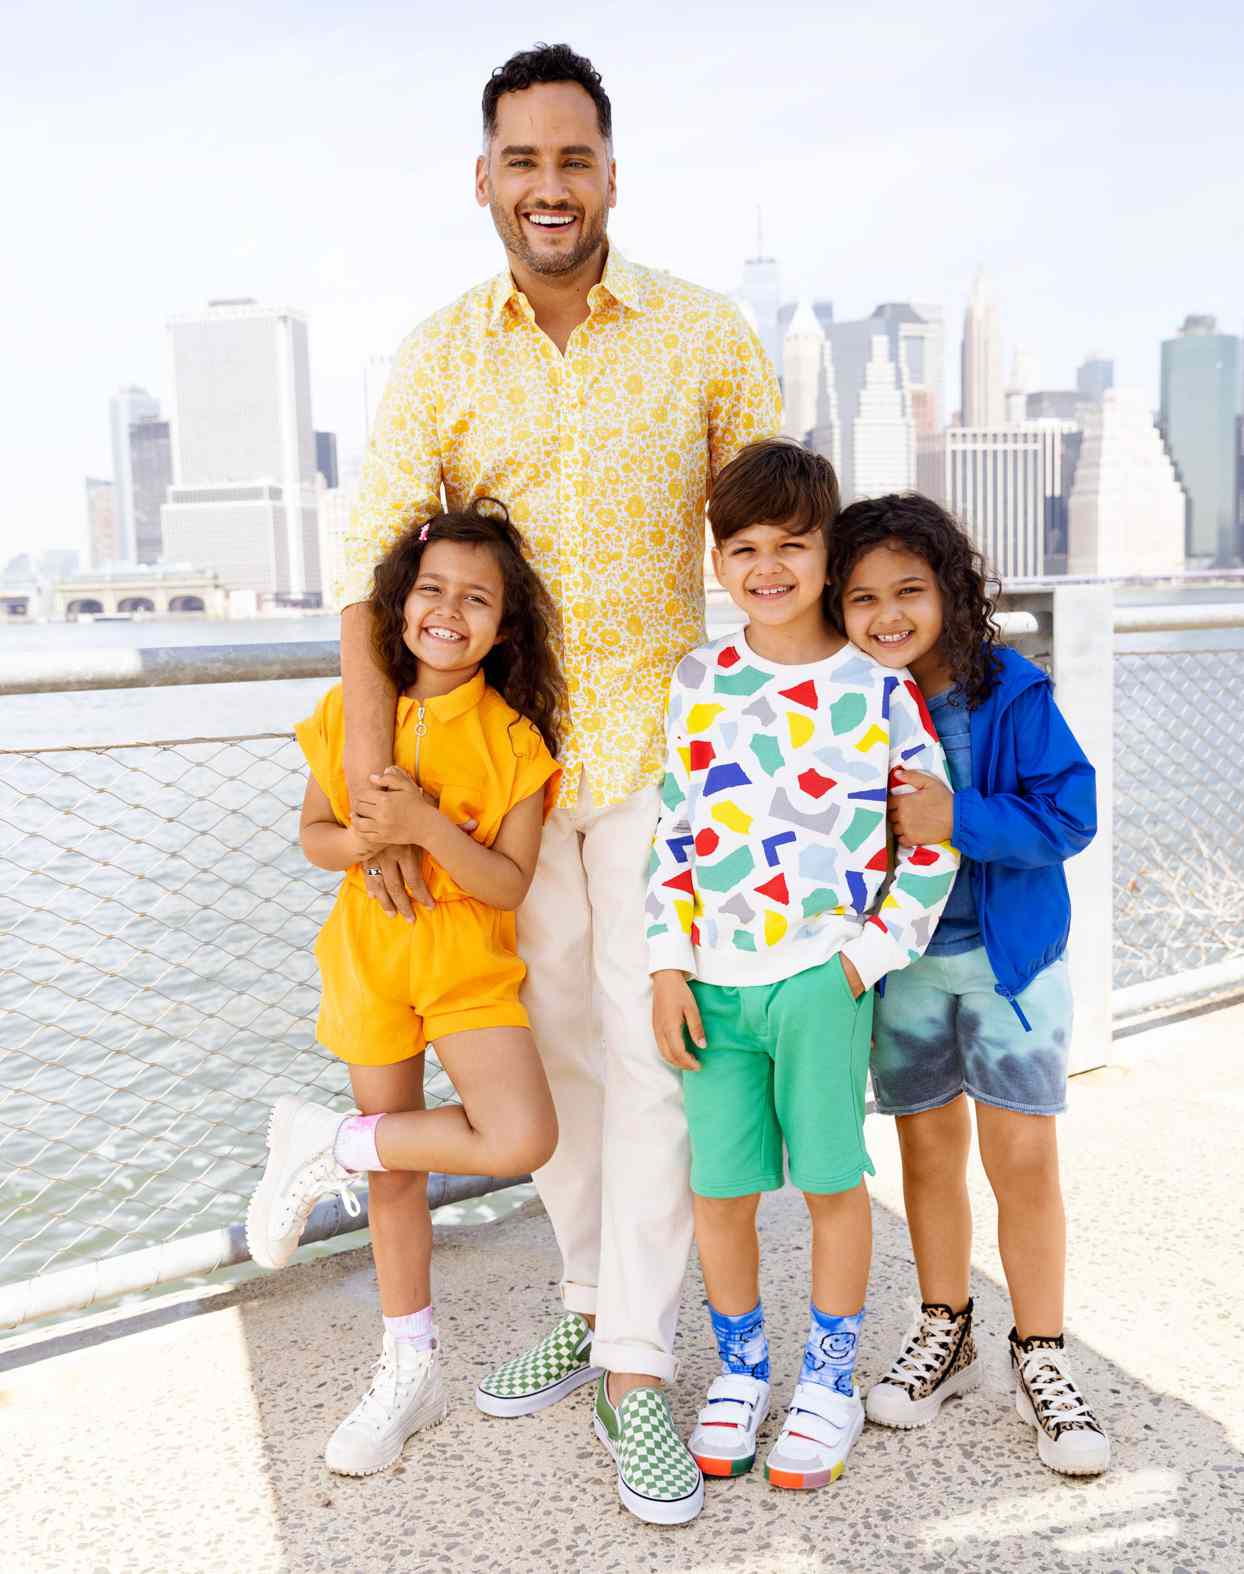 José Rolón with three kids portrait in front of NYC skyline